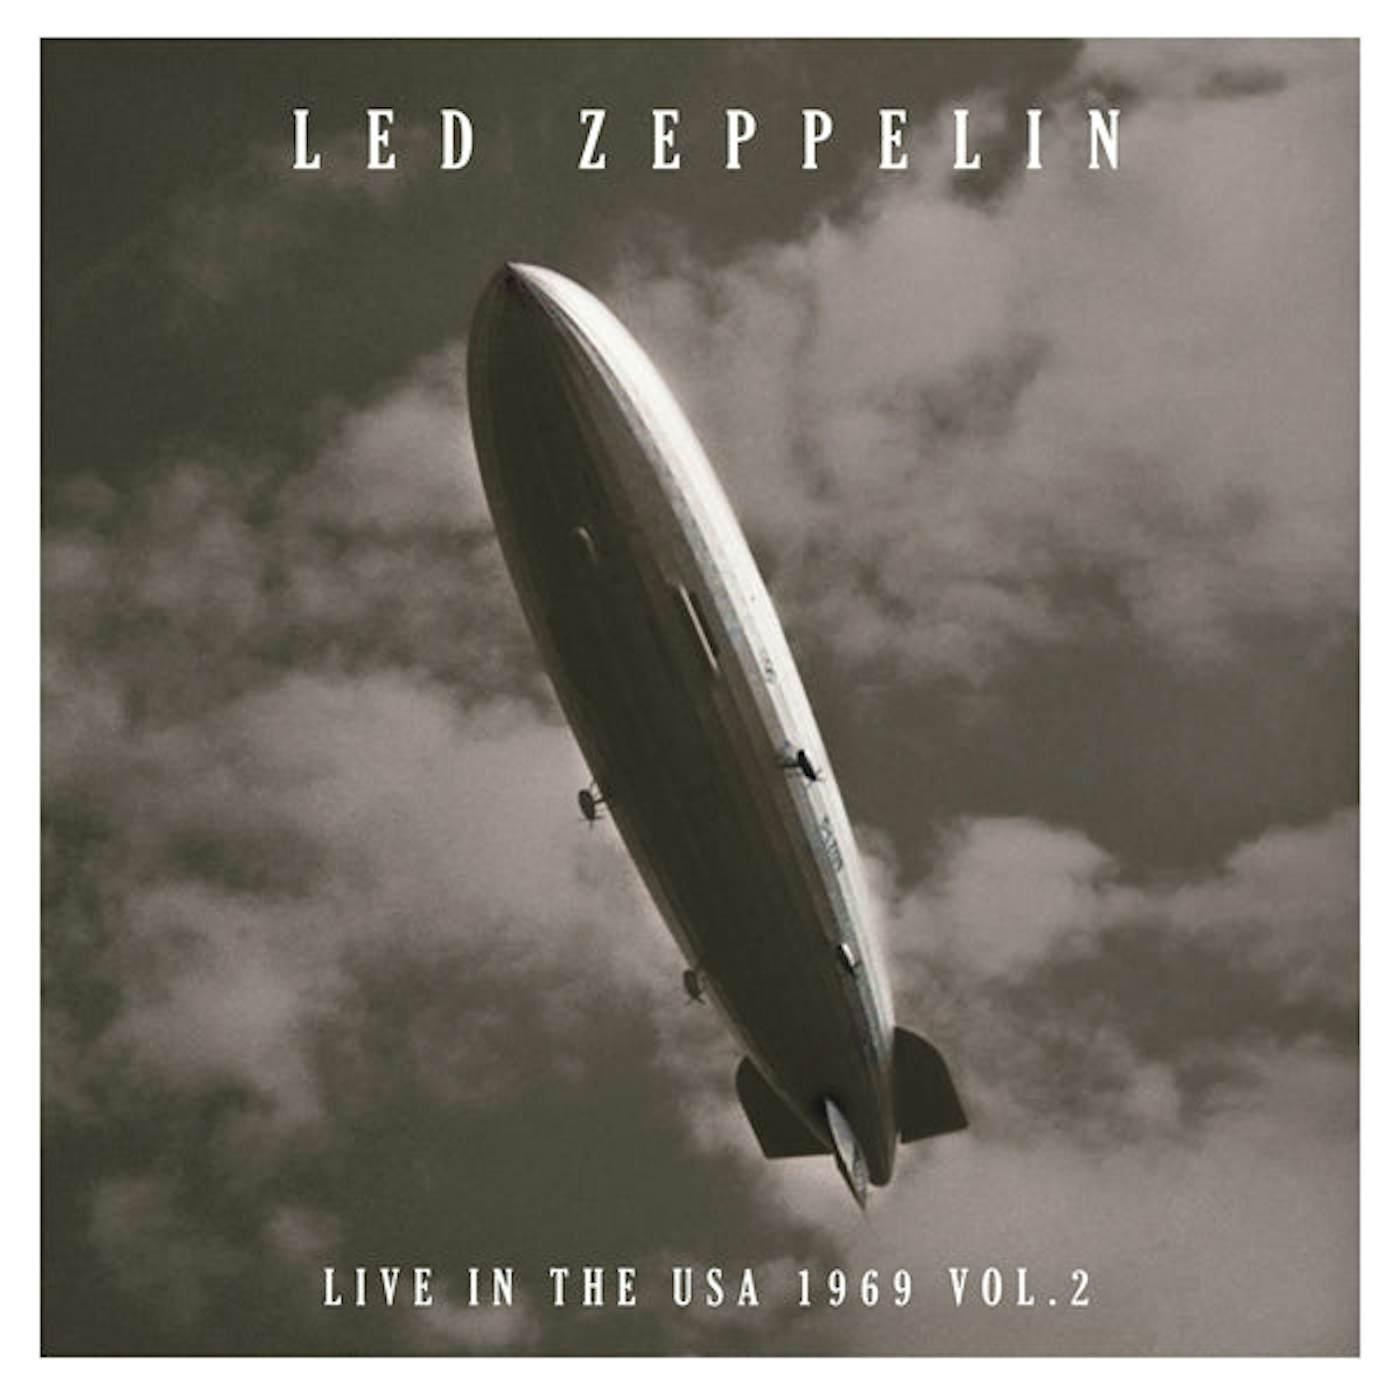 Led Zeppelin LP - Live In The USA 1969 Vol. 2 (Vinyl)